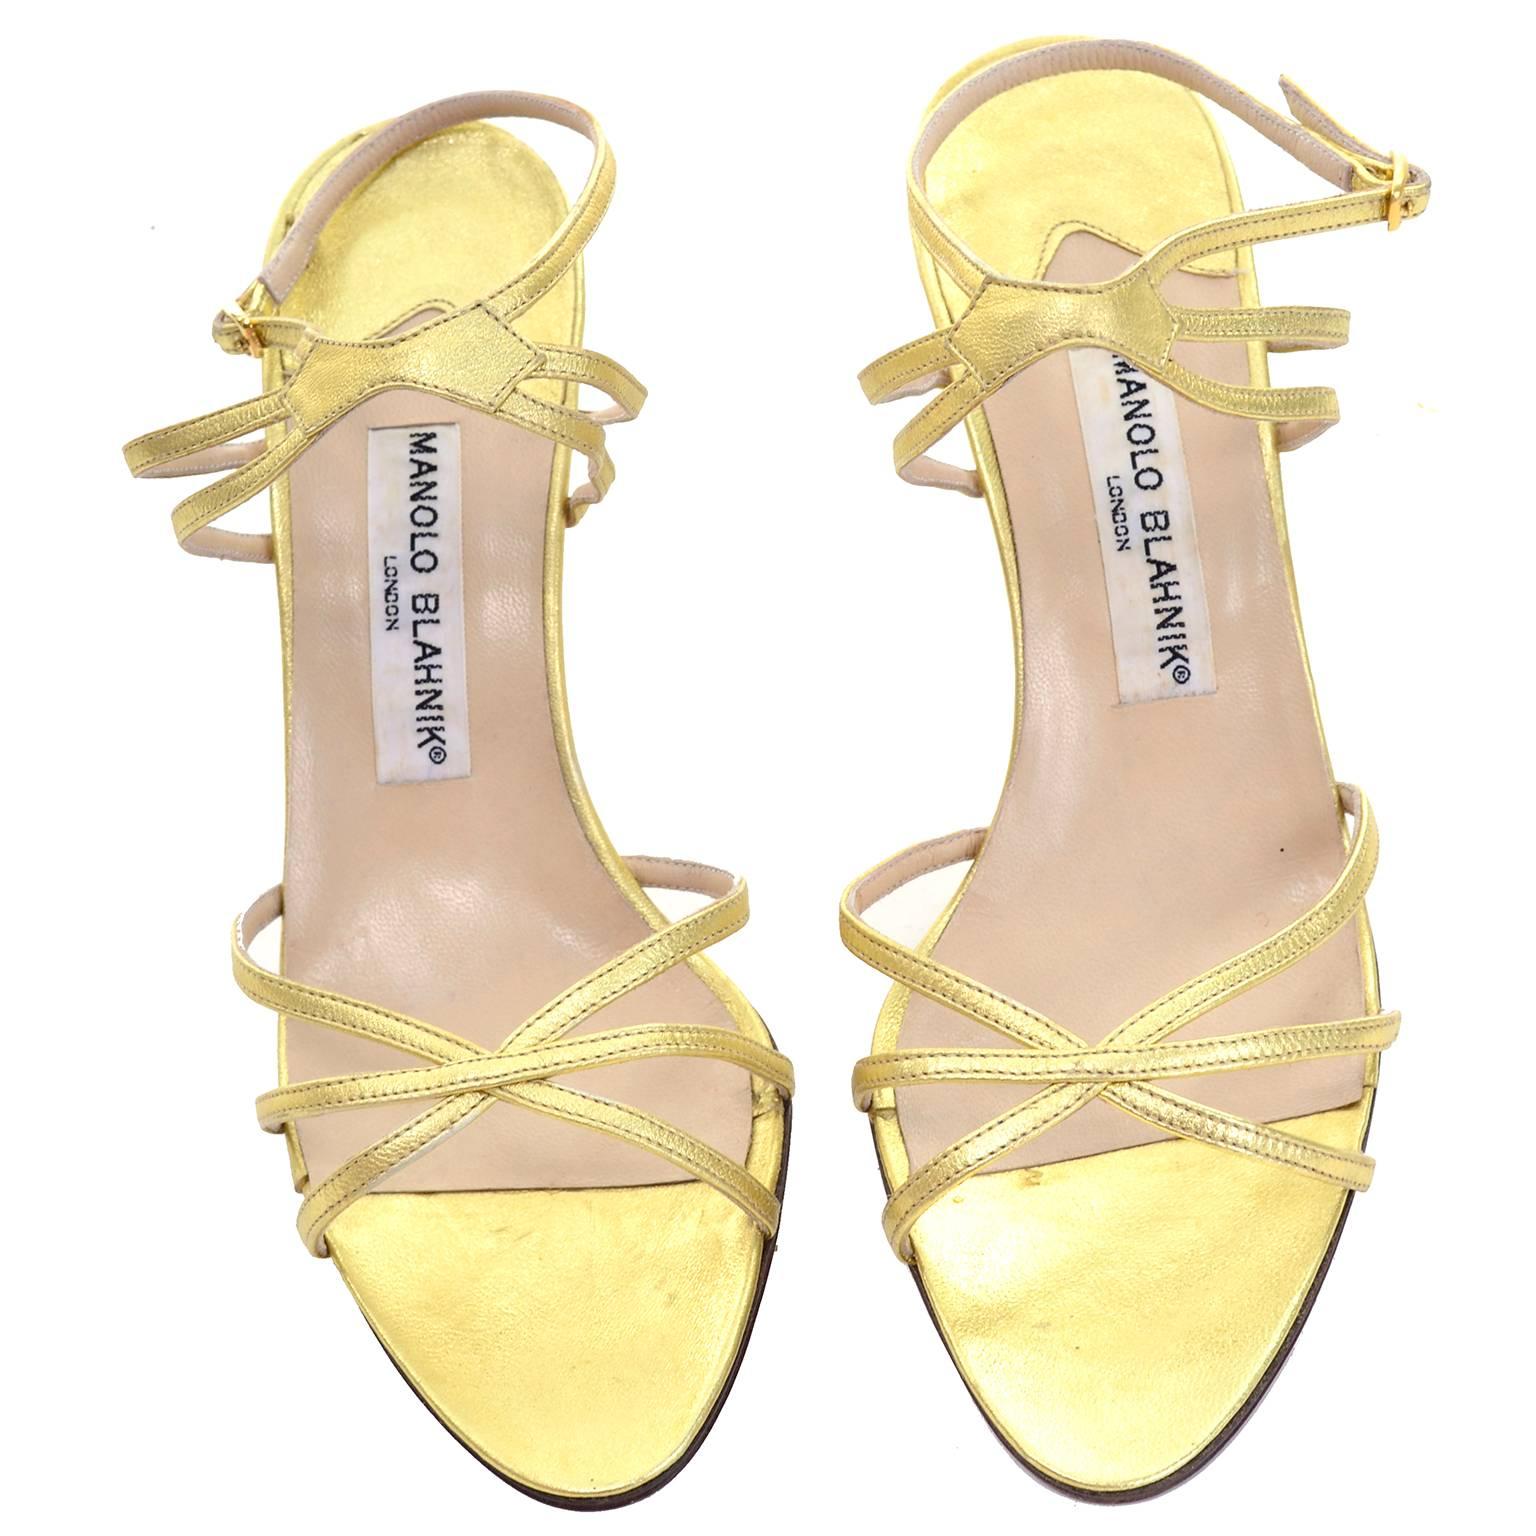 vintage gold heels